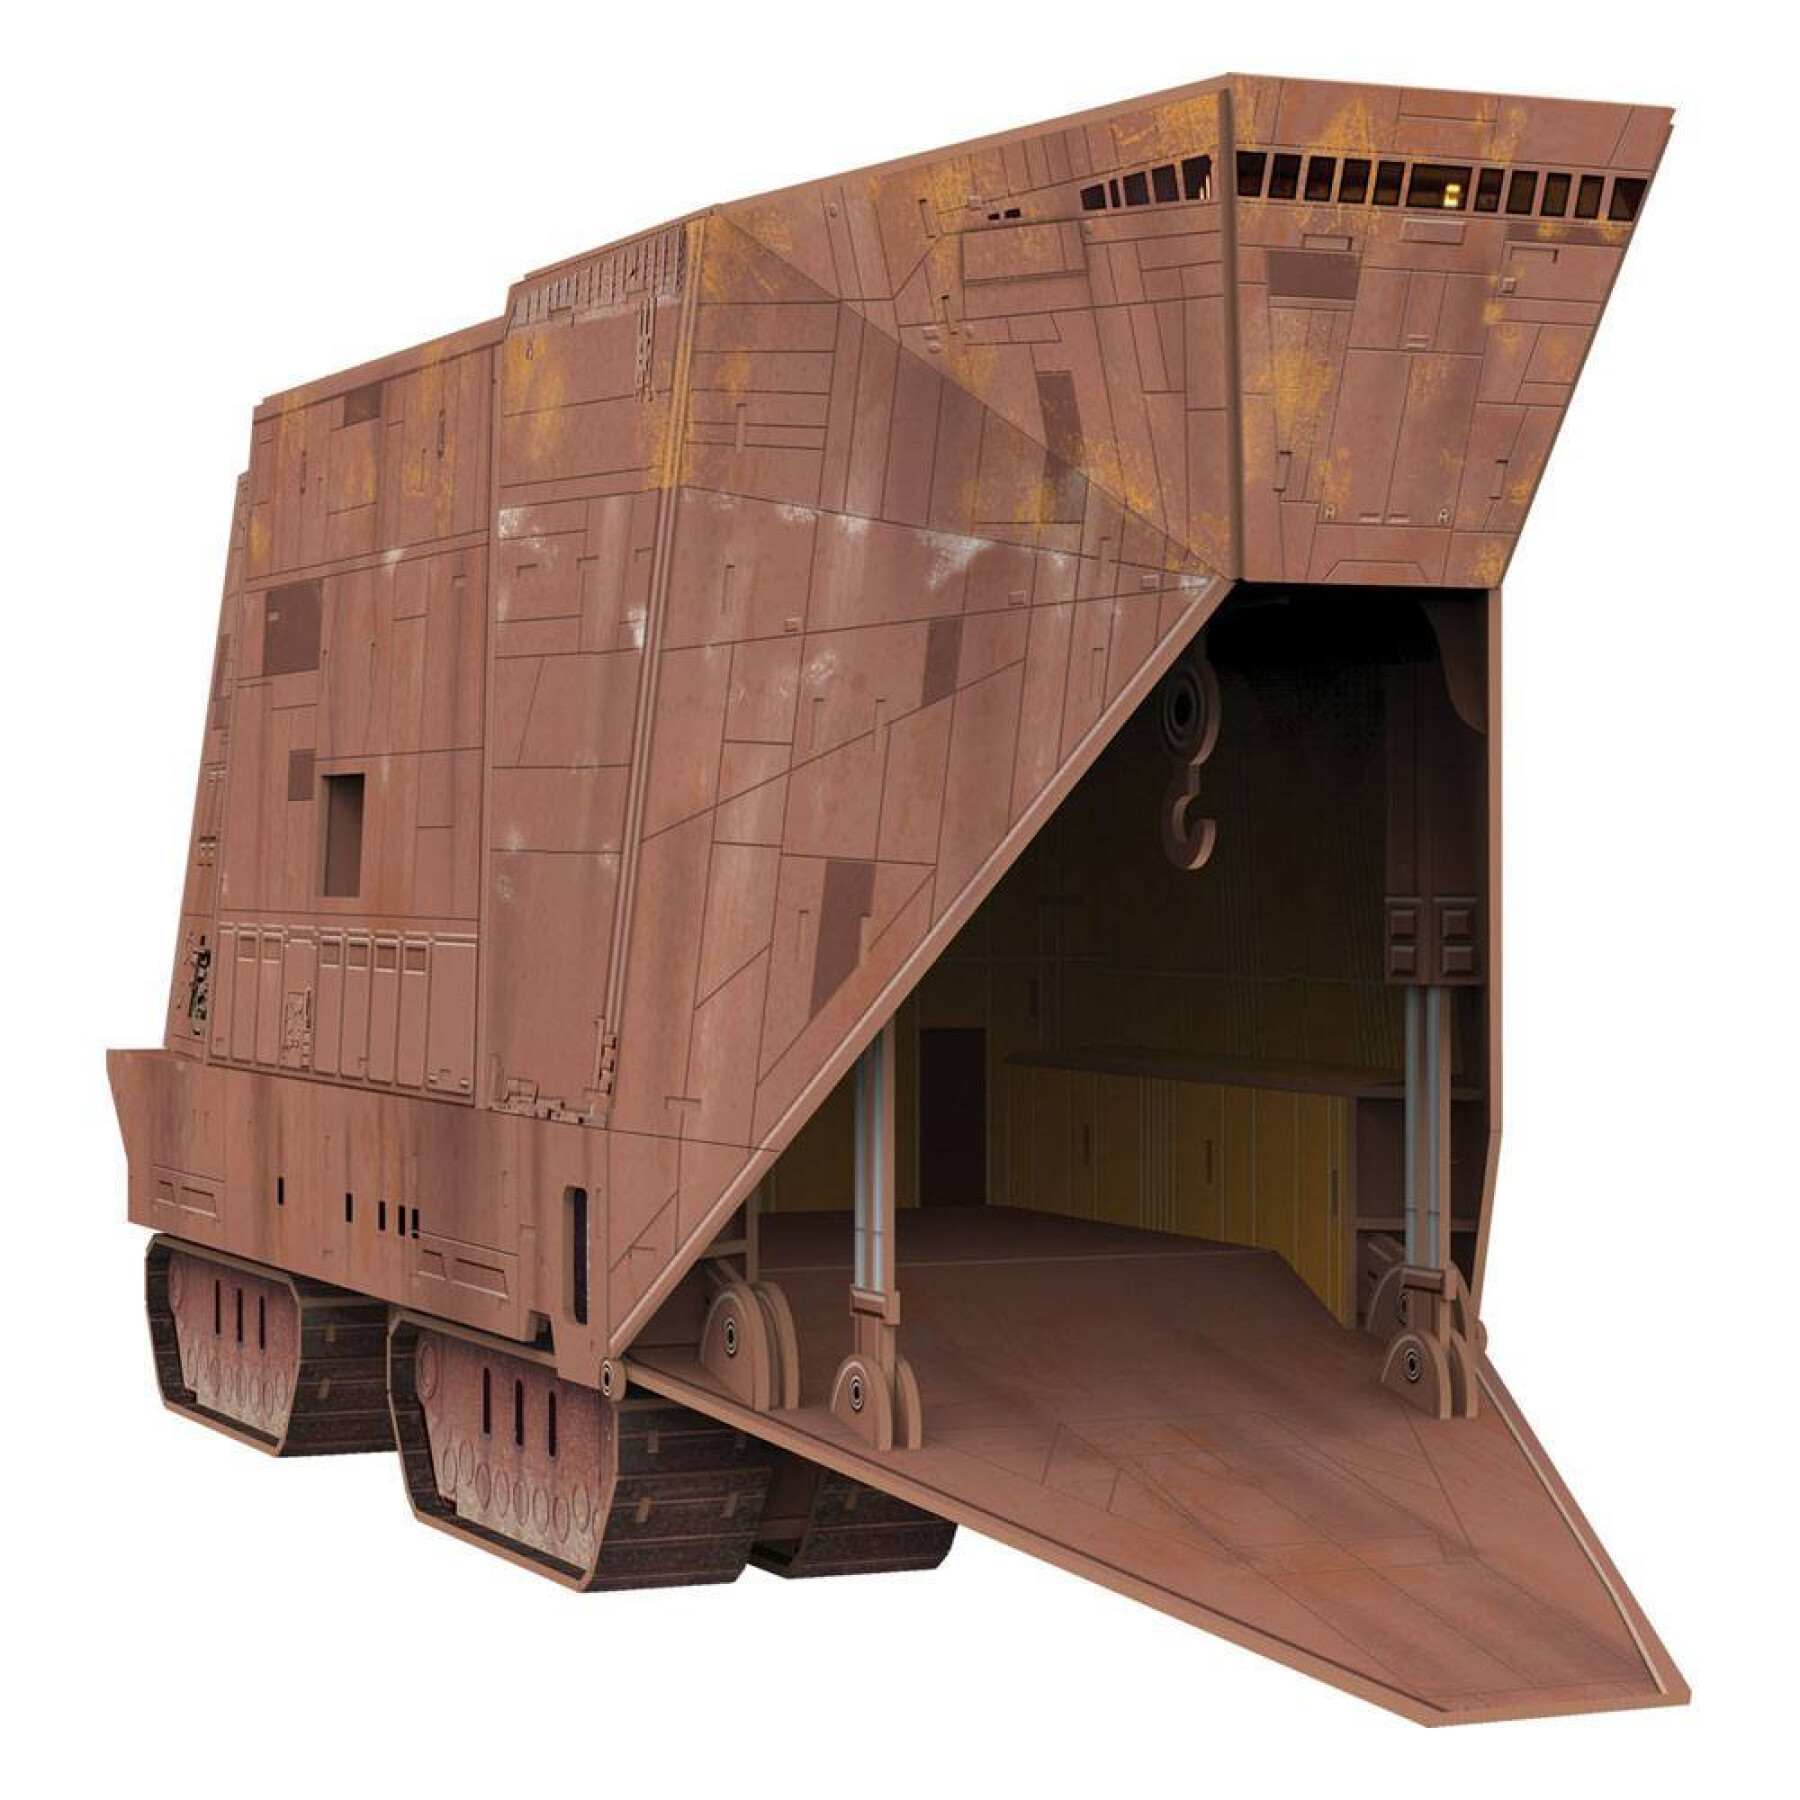 3d puzzle - sandcrawler Revell Star Wars: The Mandalorian